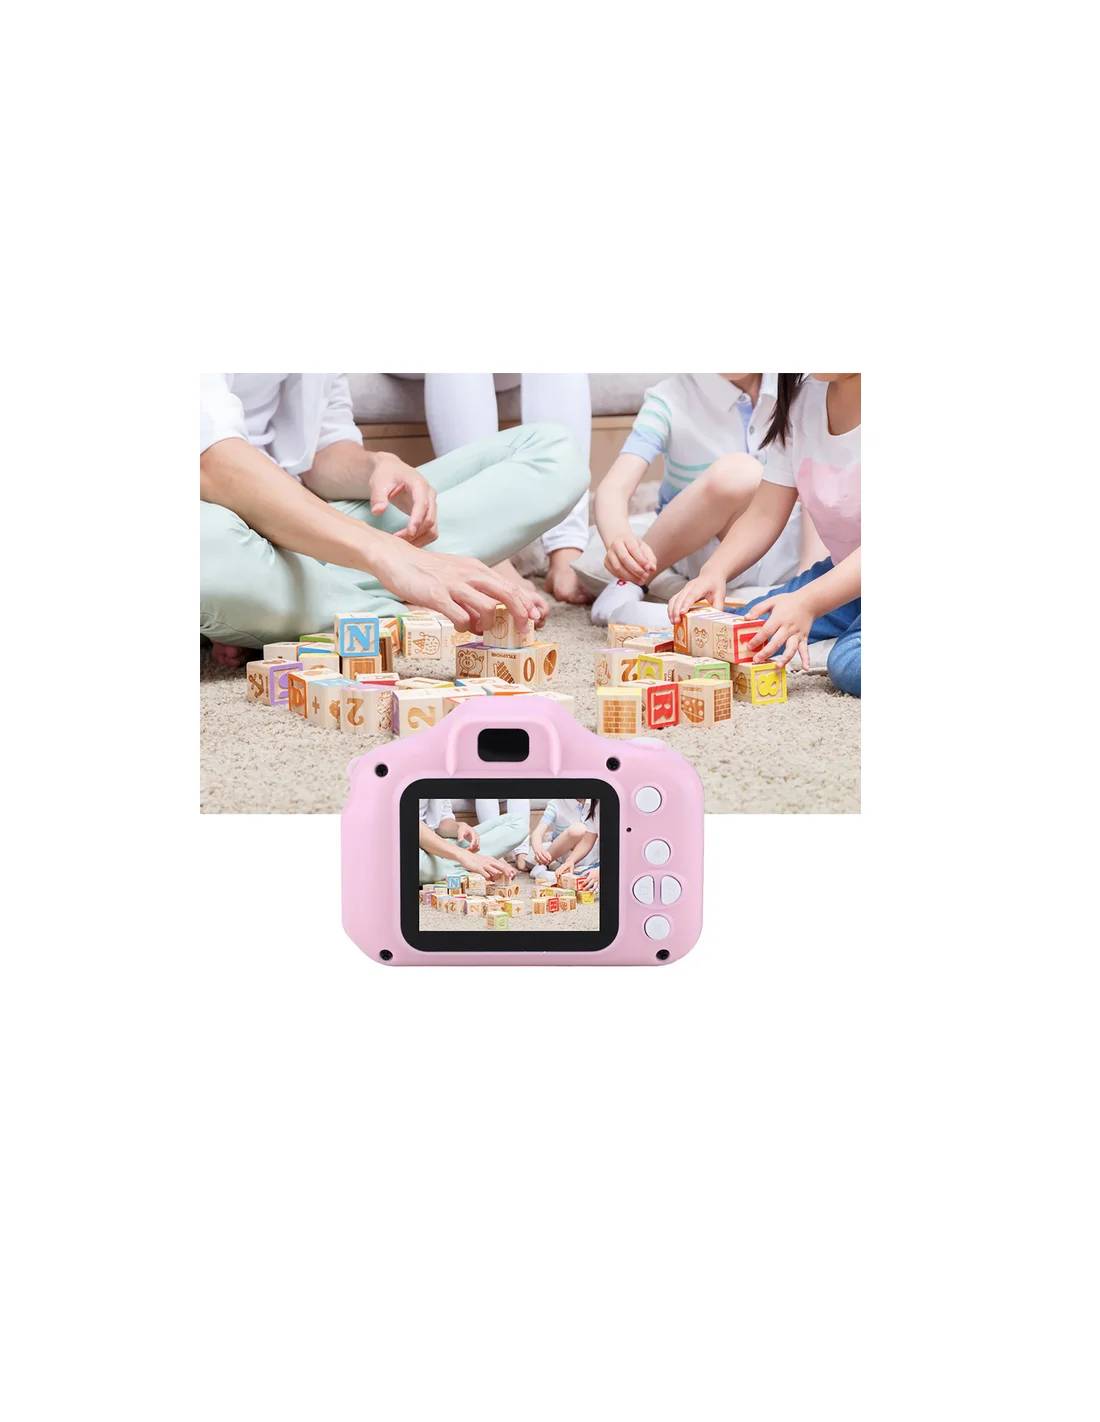 Mini aparat foto, video, jocuri roz pentru copii, Elastix